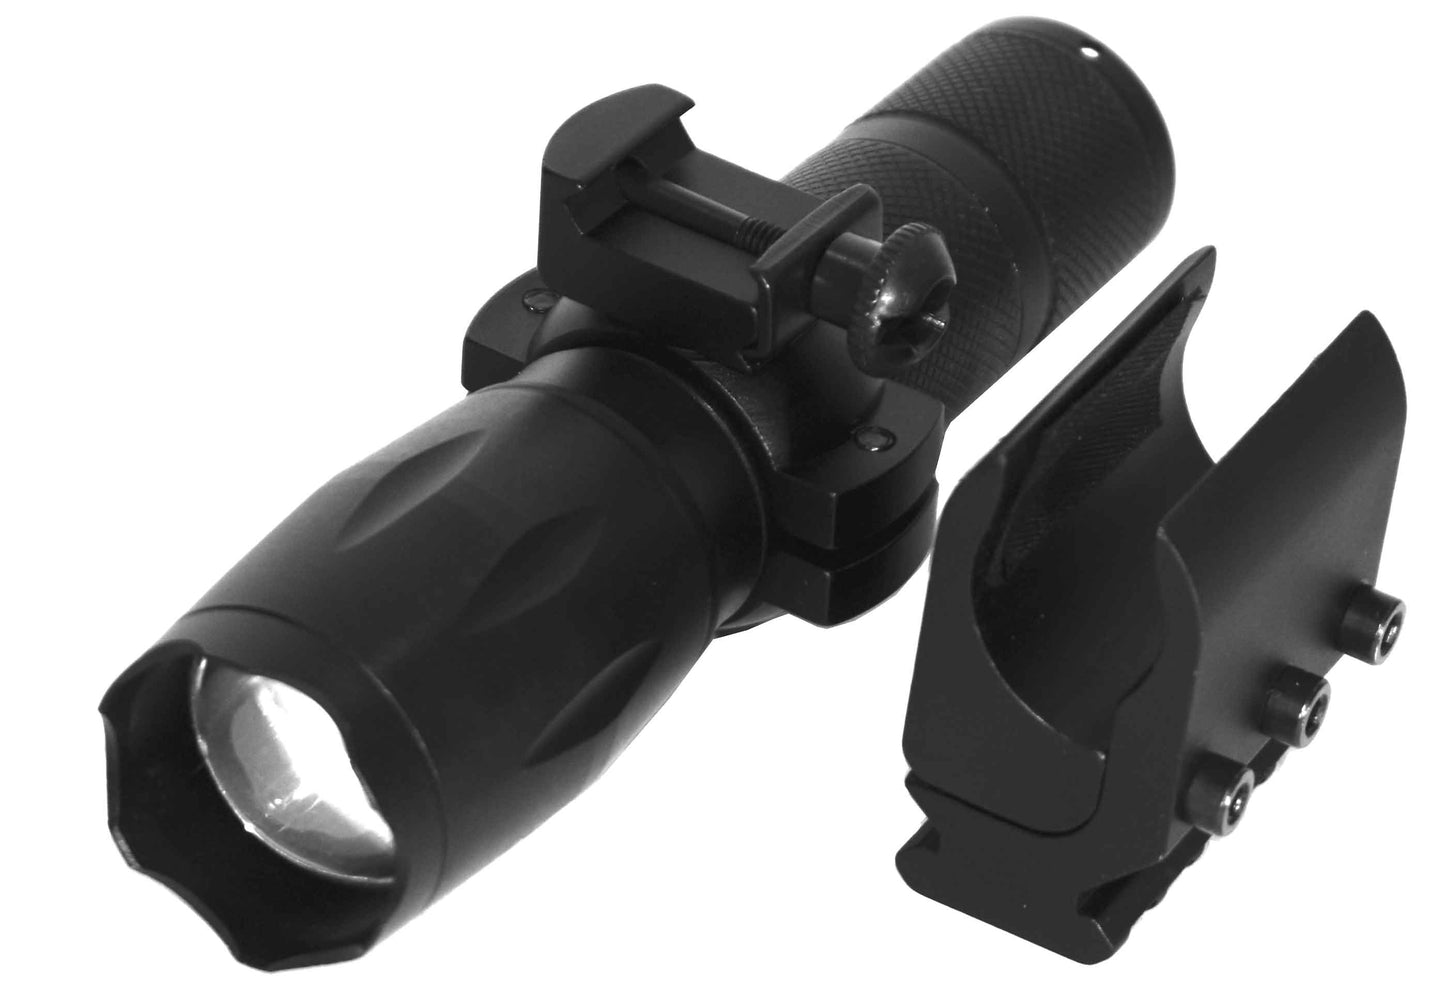 Mossberg 590 20 gauge pump tactical flashlight with mount aluminum black hunting light.